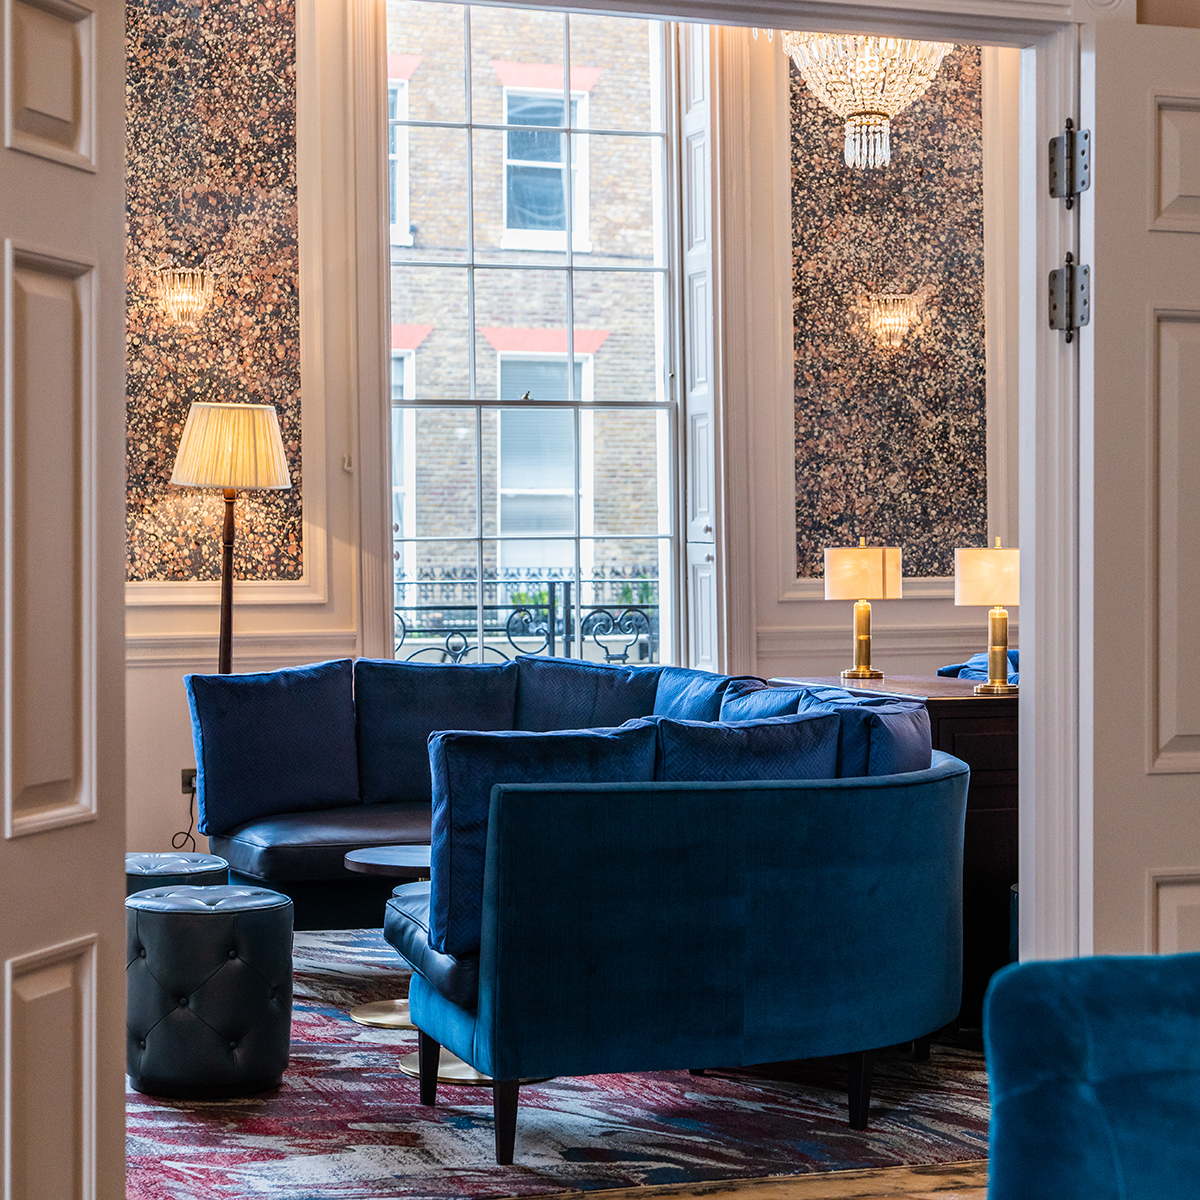 Luxury interiors of a London members' club